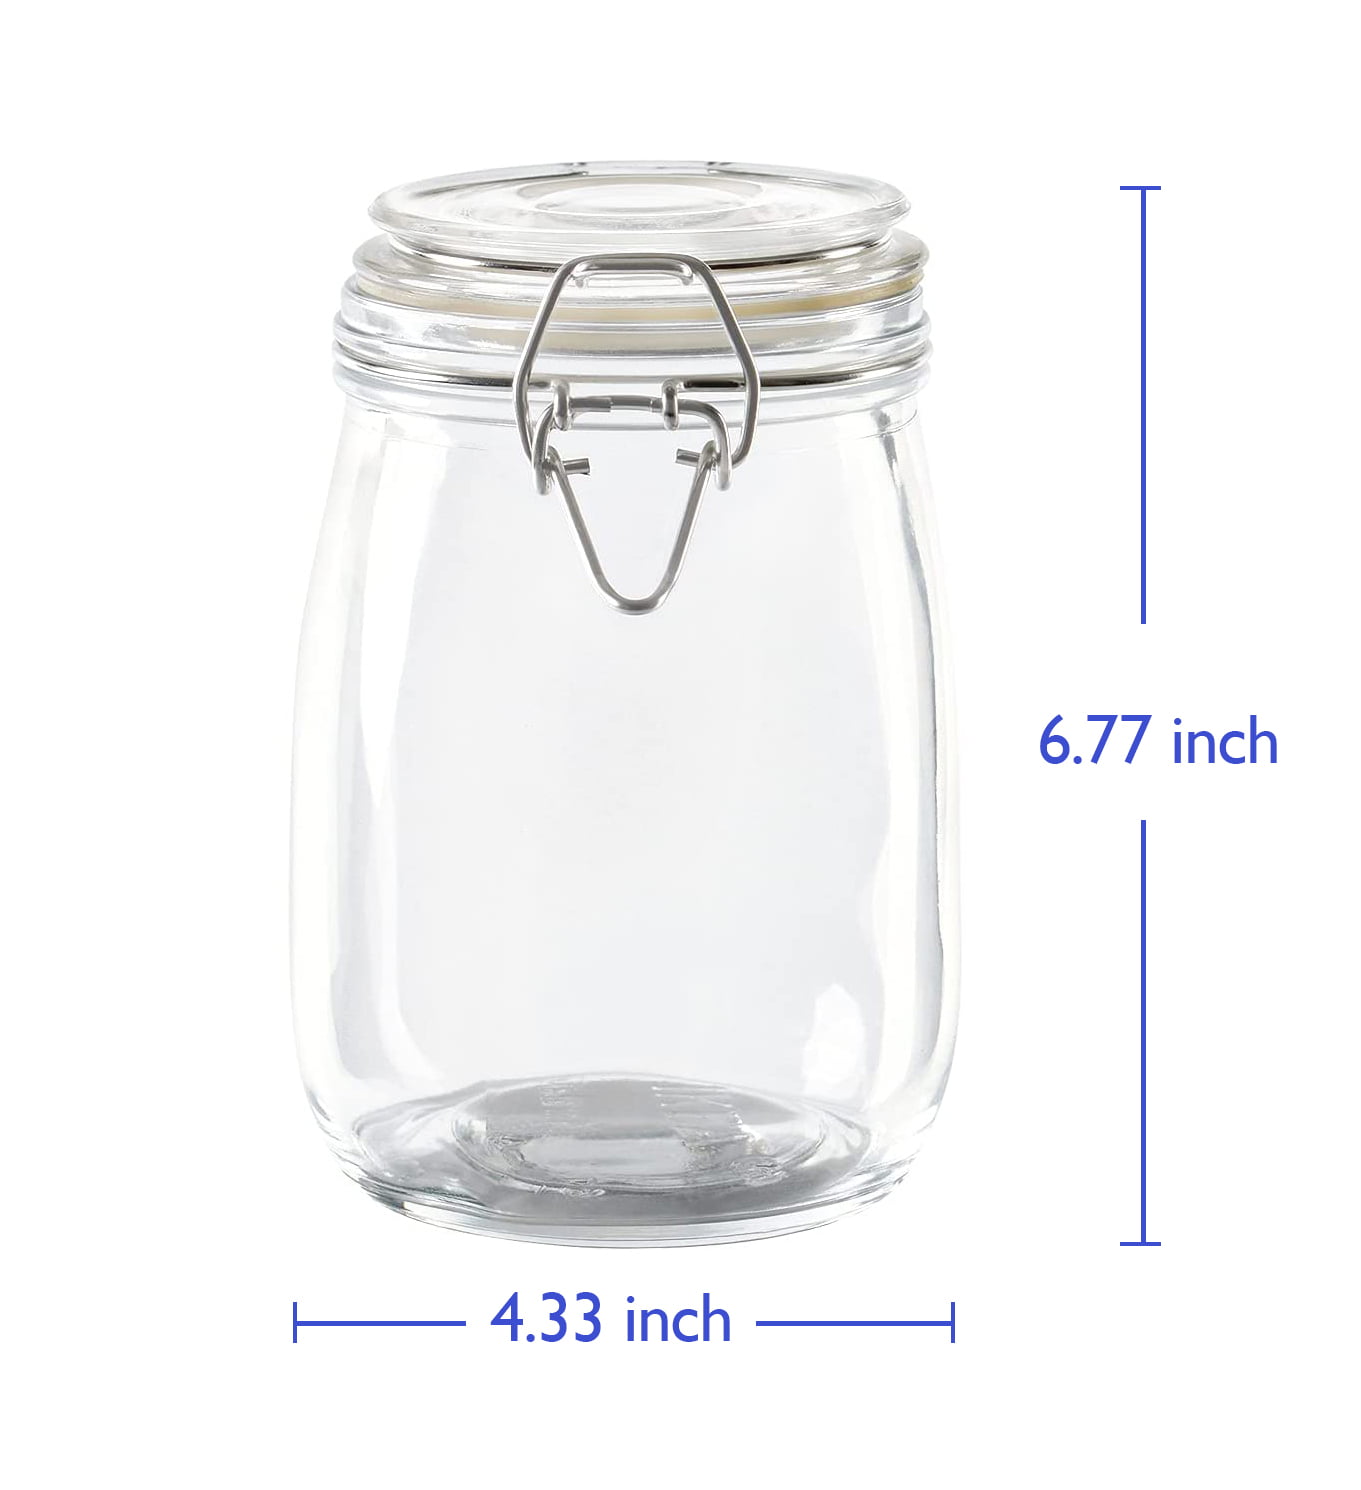 Airtight Glass Jar with Lid - Small [HX4006] - $17.00